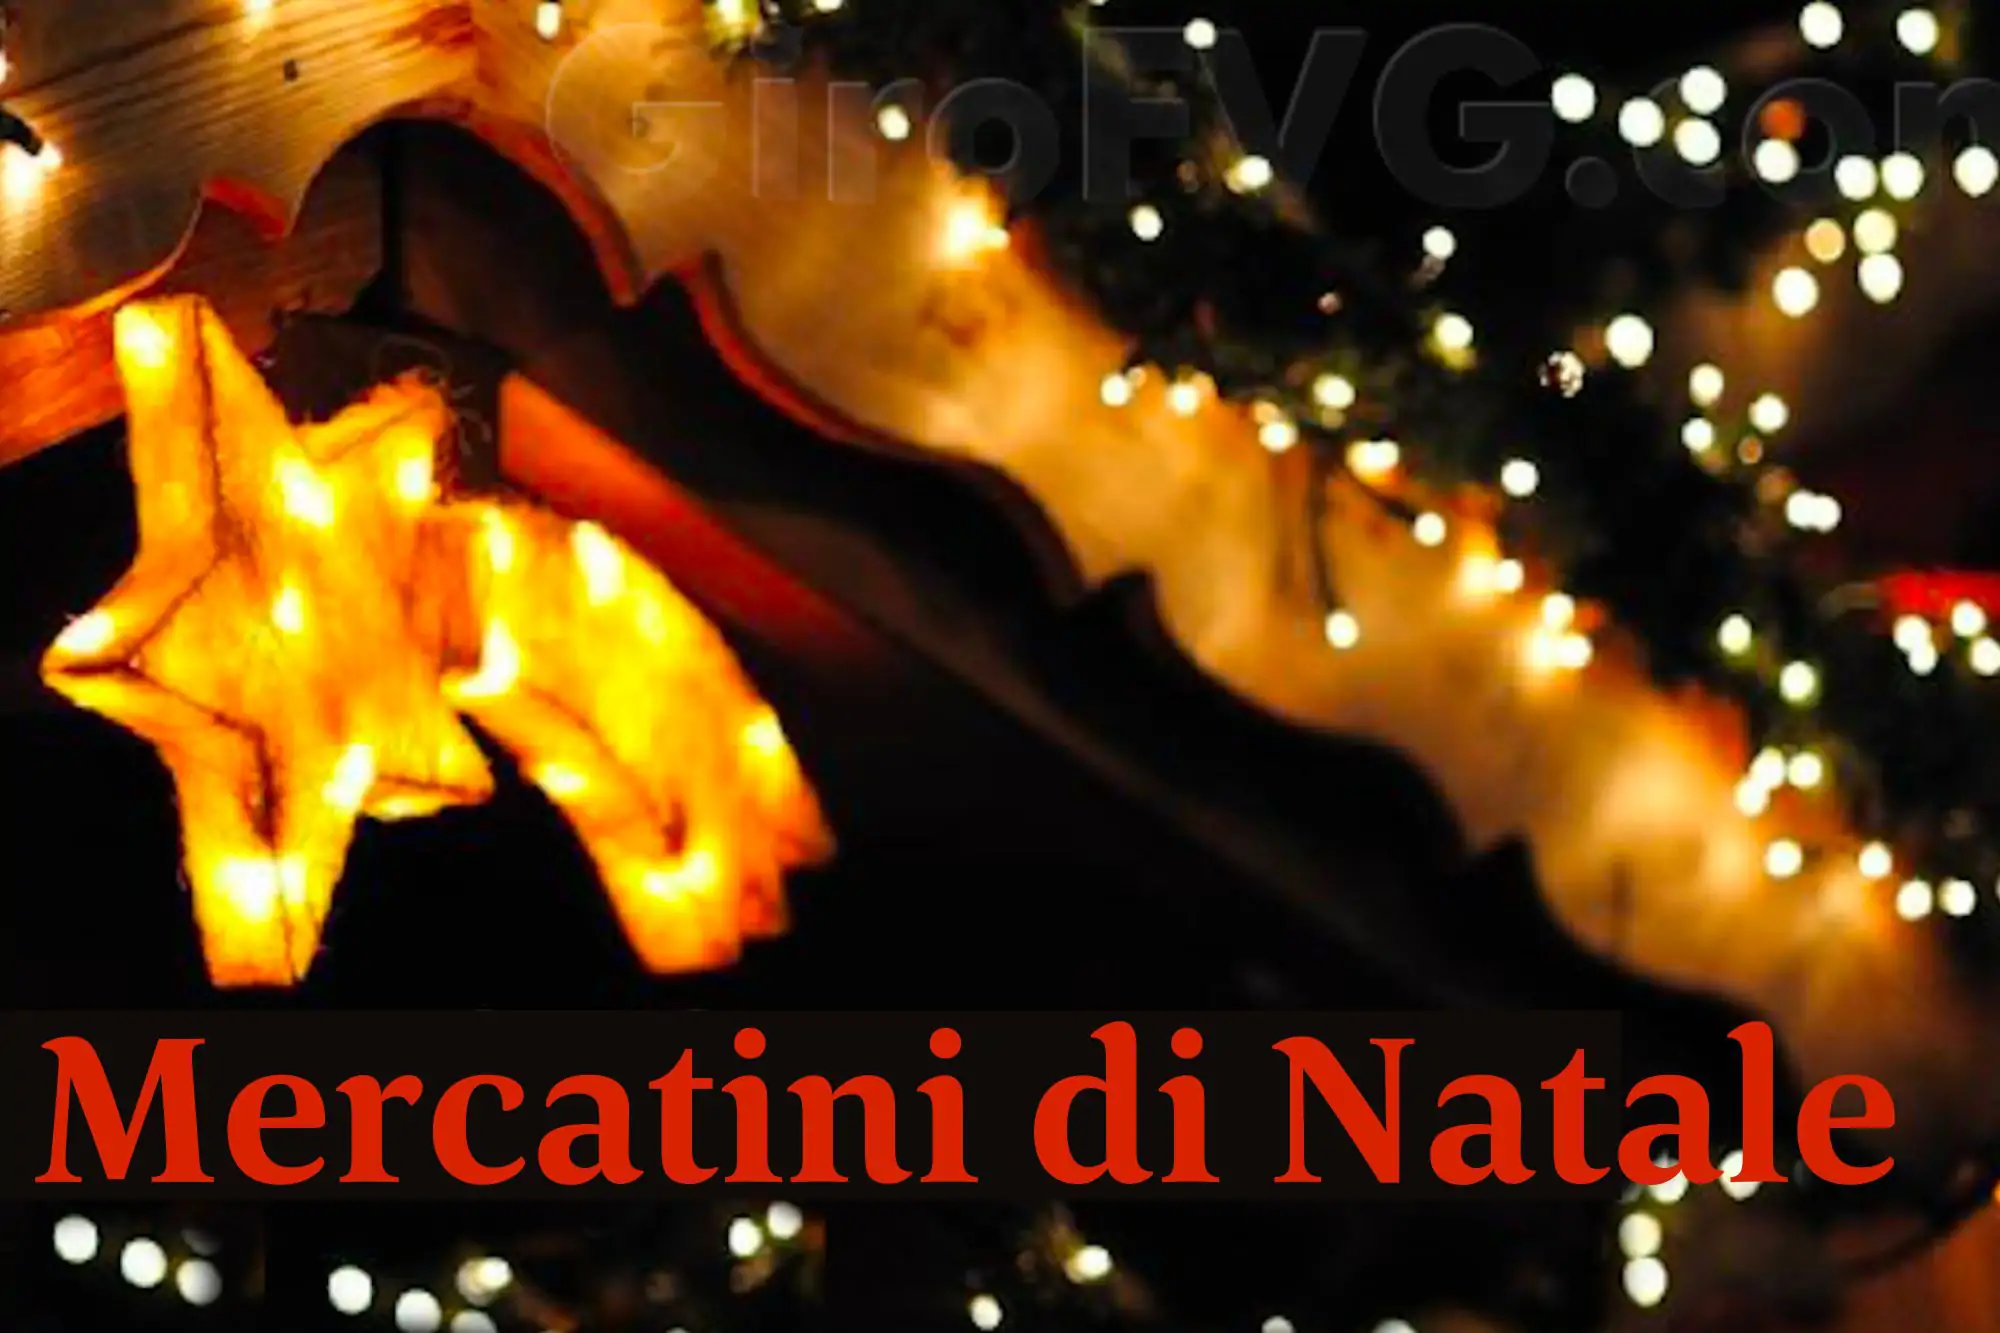 Mercatini di Natale in Friuli Venezia Giulia